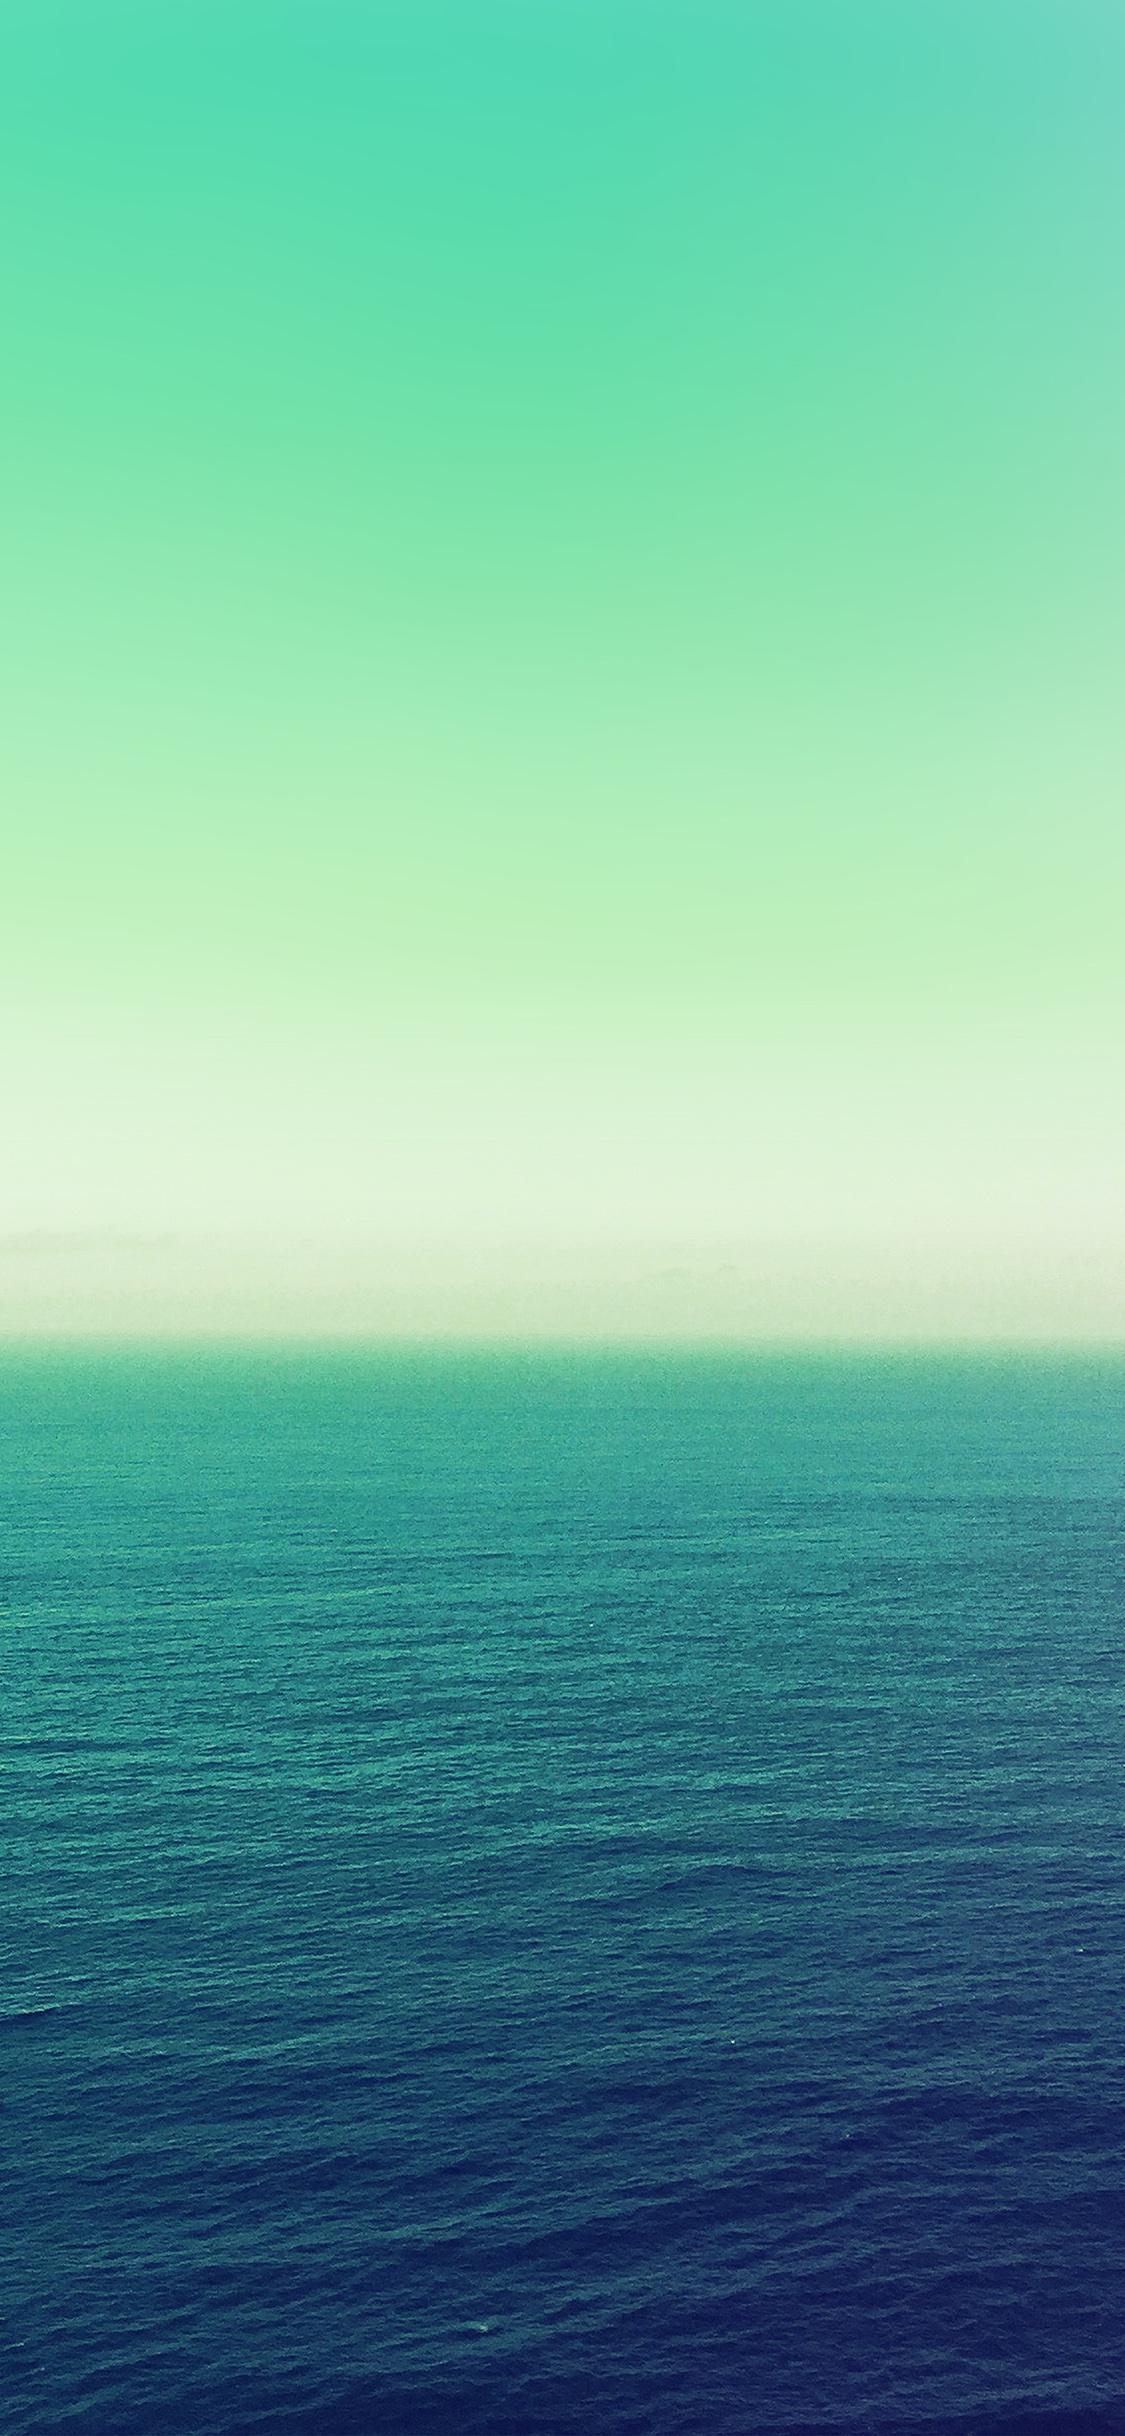 iPhone wallpaper. calm sea green ocean